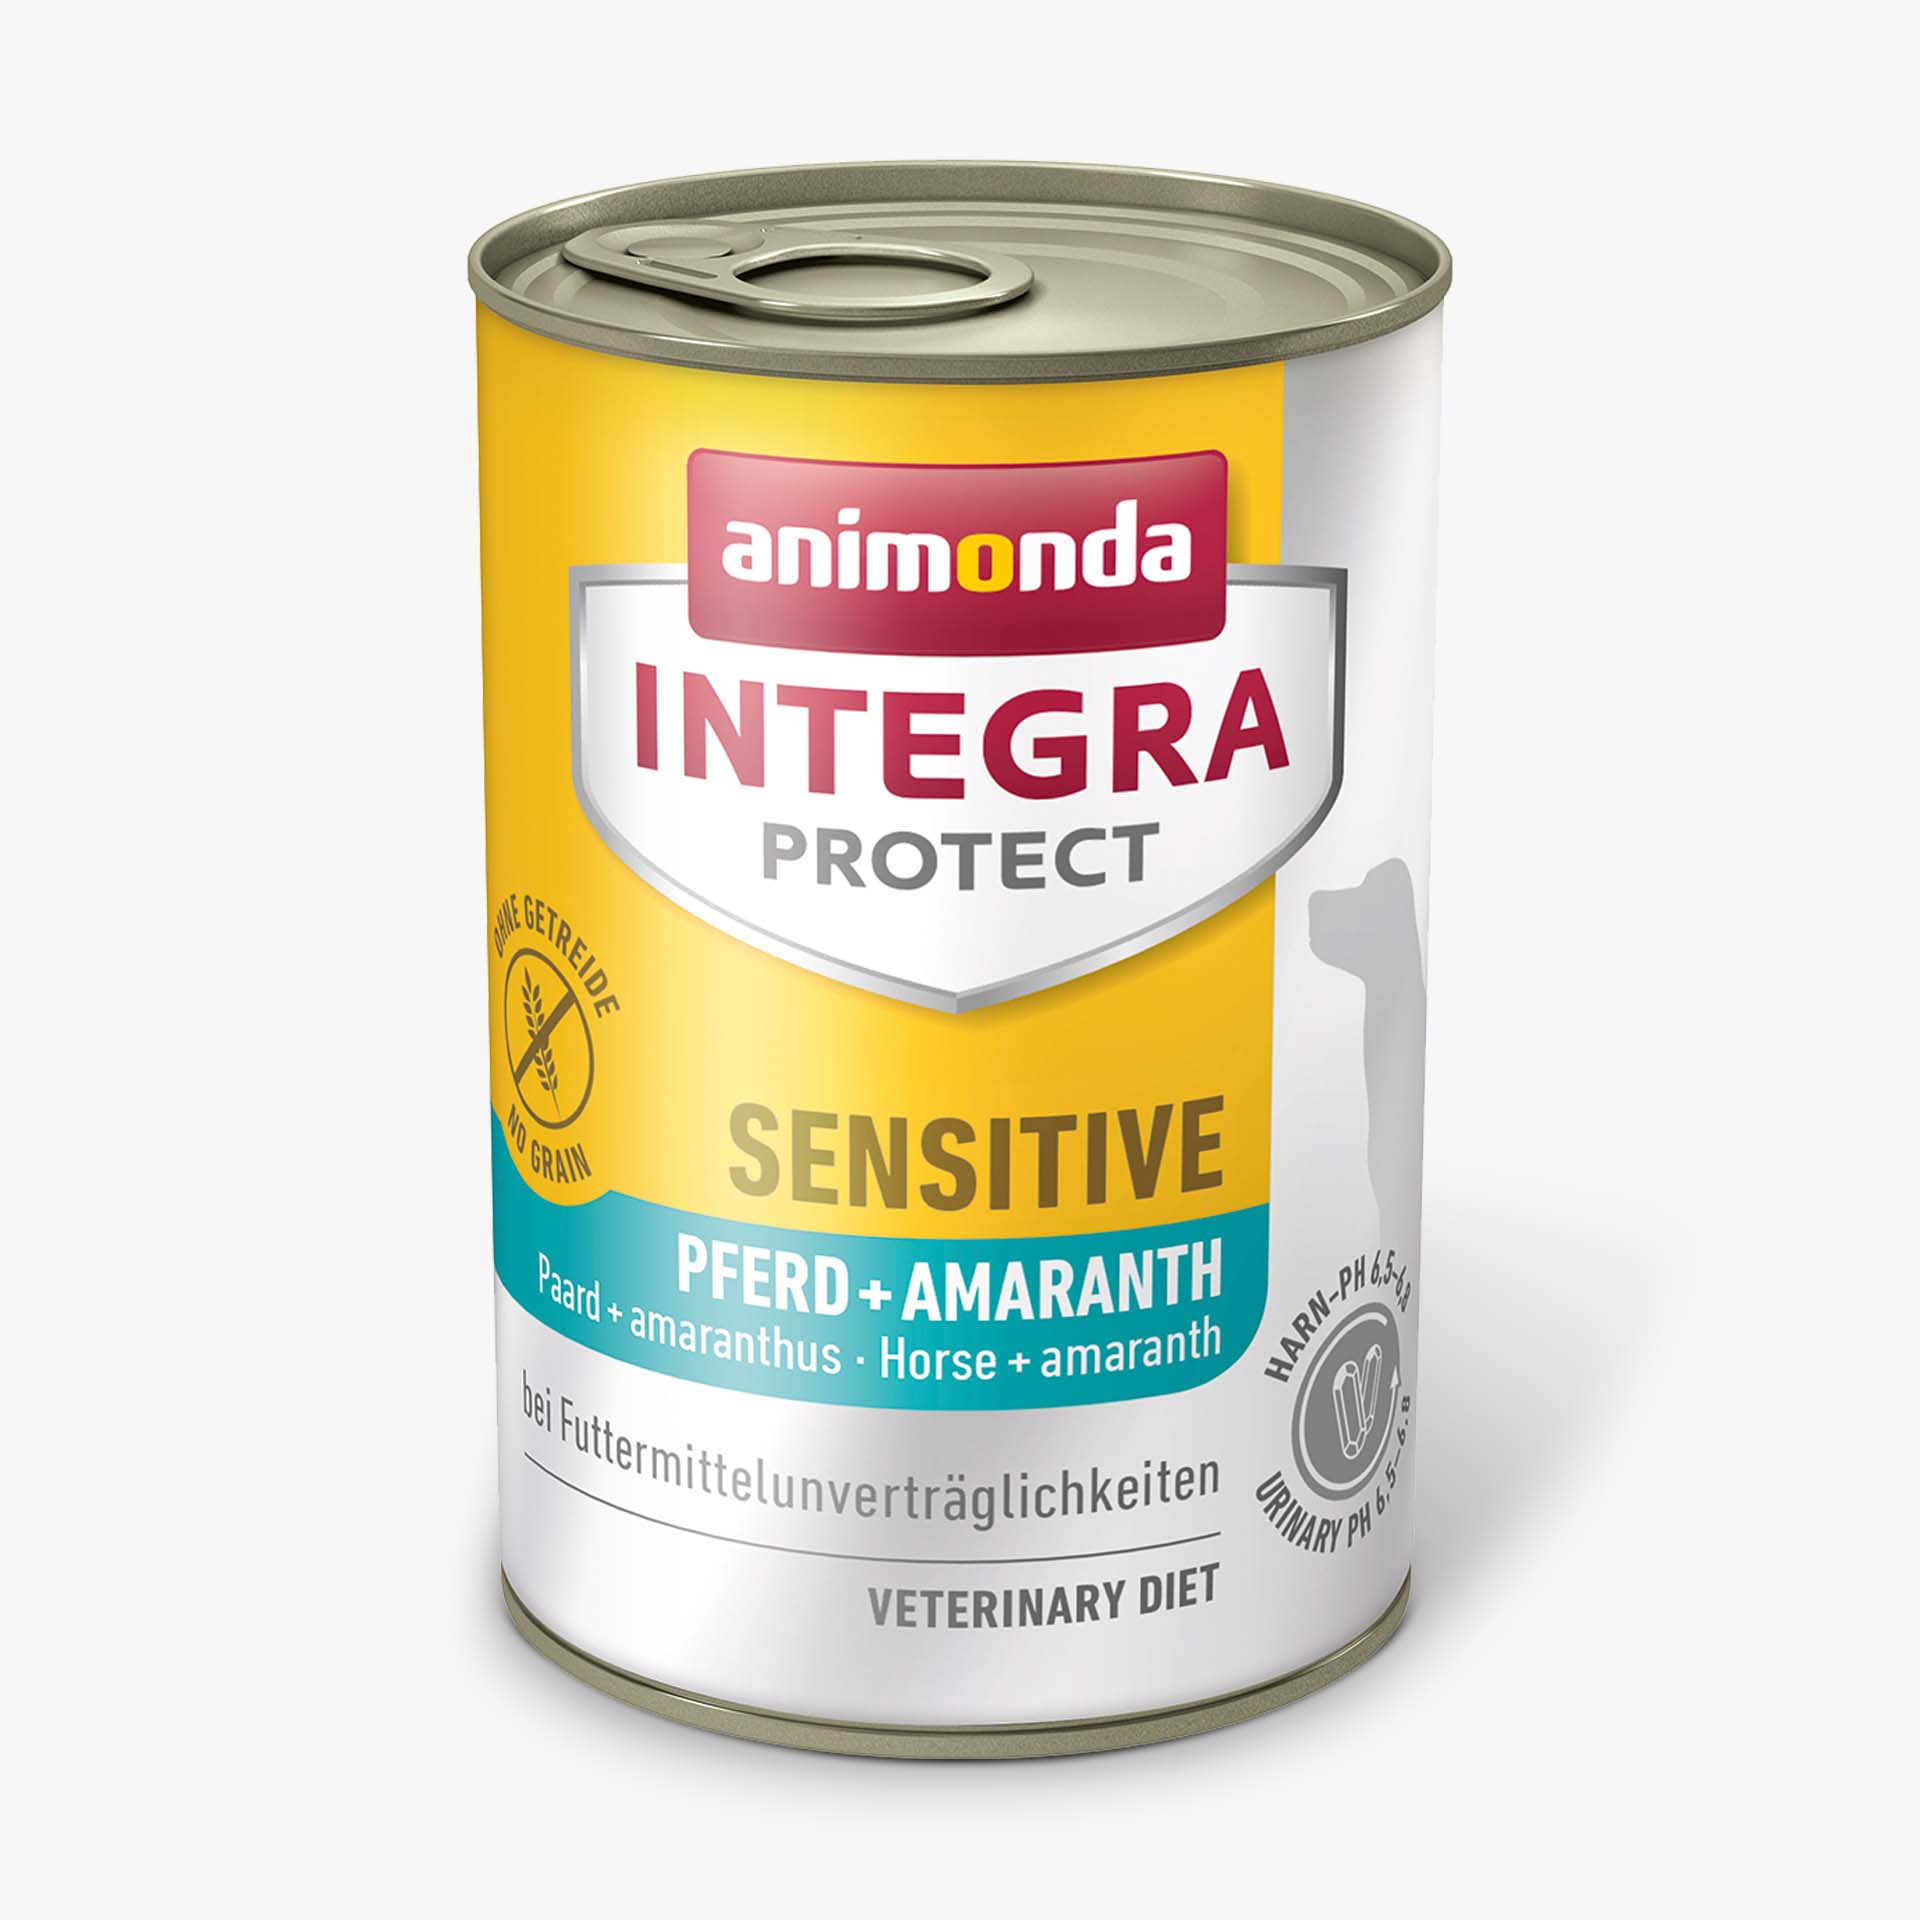 INTEGRA PROTECT Horse + amaranth Sensitive